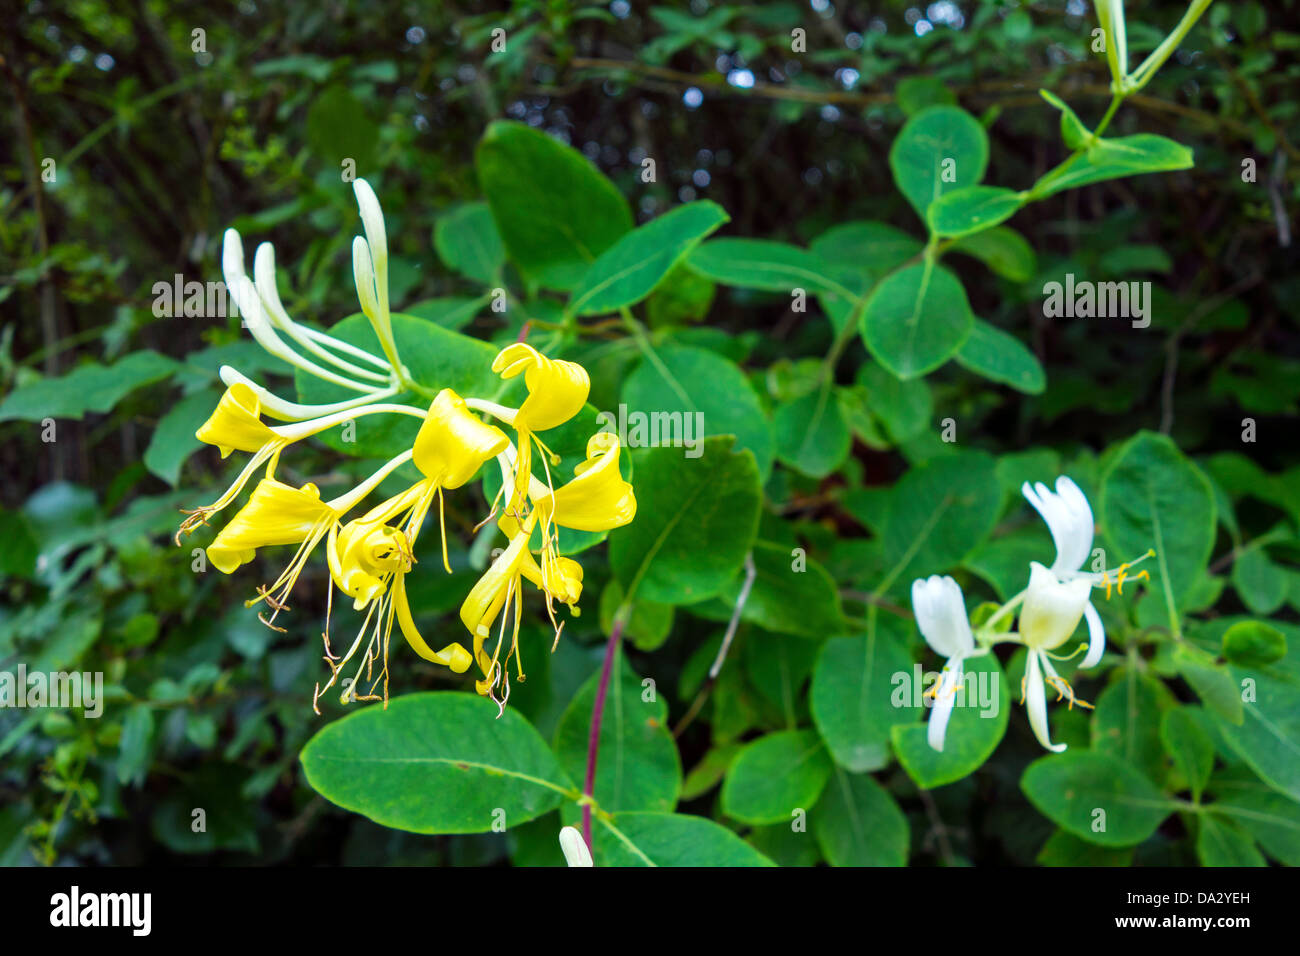 Honeysuckle flowers in bloom, yellow on green Stock Photo